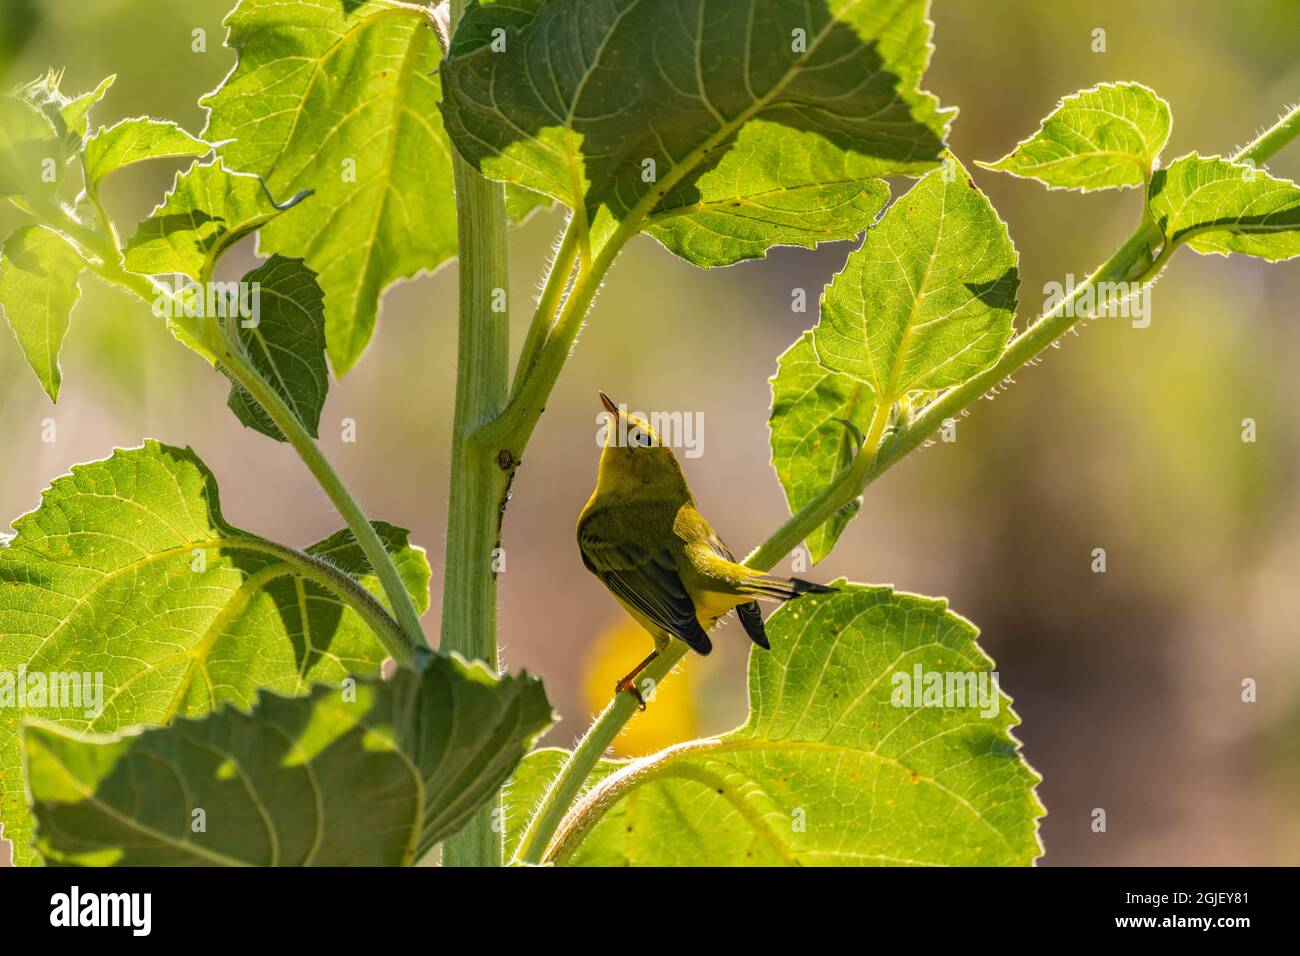 USA, New Mexico. Wilson's warbler bird on sunflower plant. Stock Photo